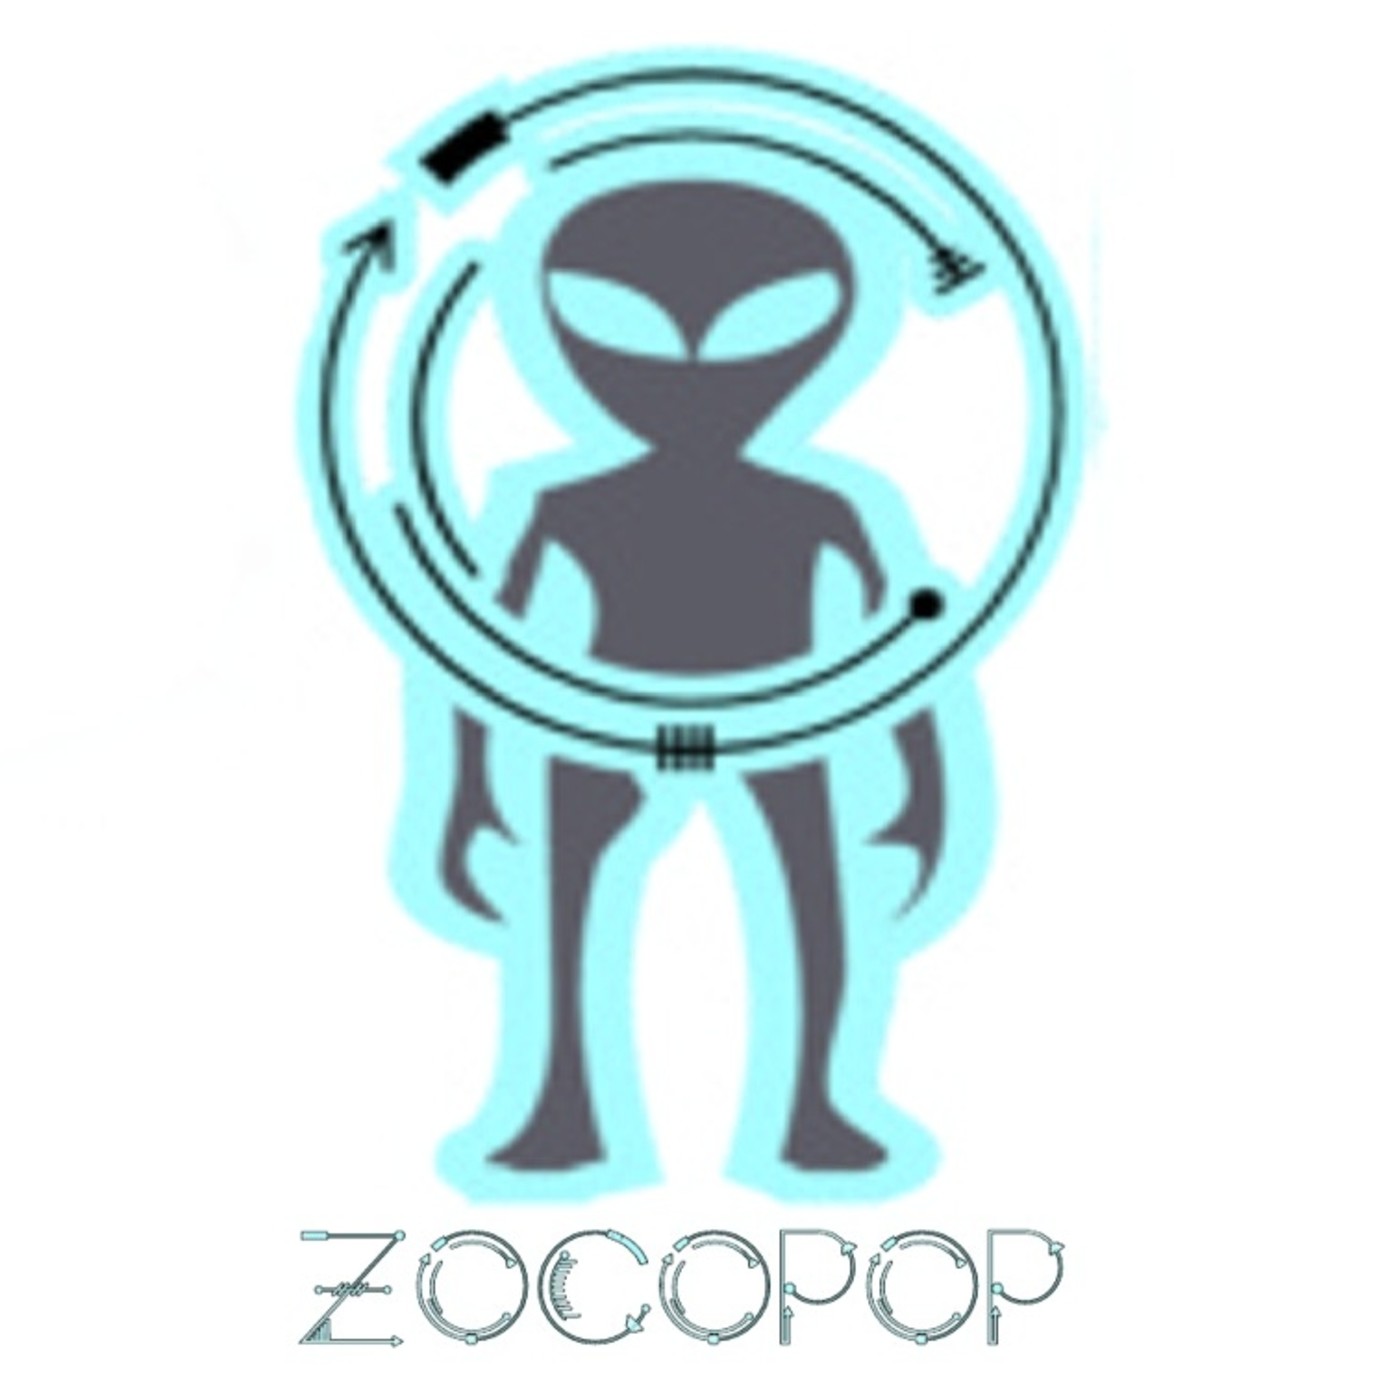 Podcast ZOCOPOP